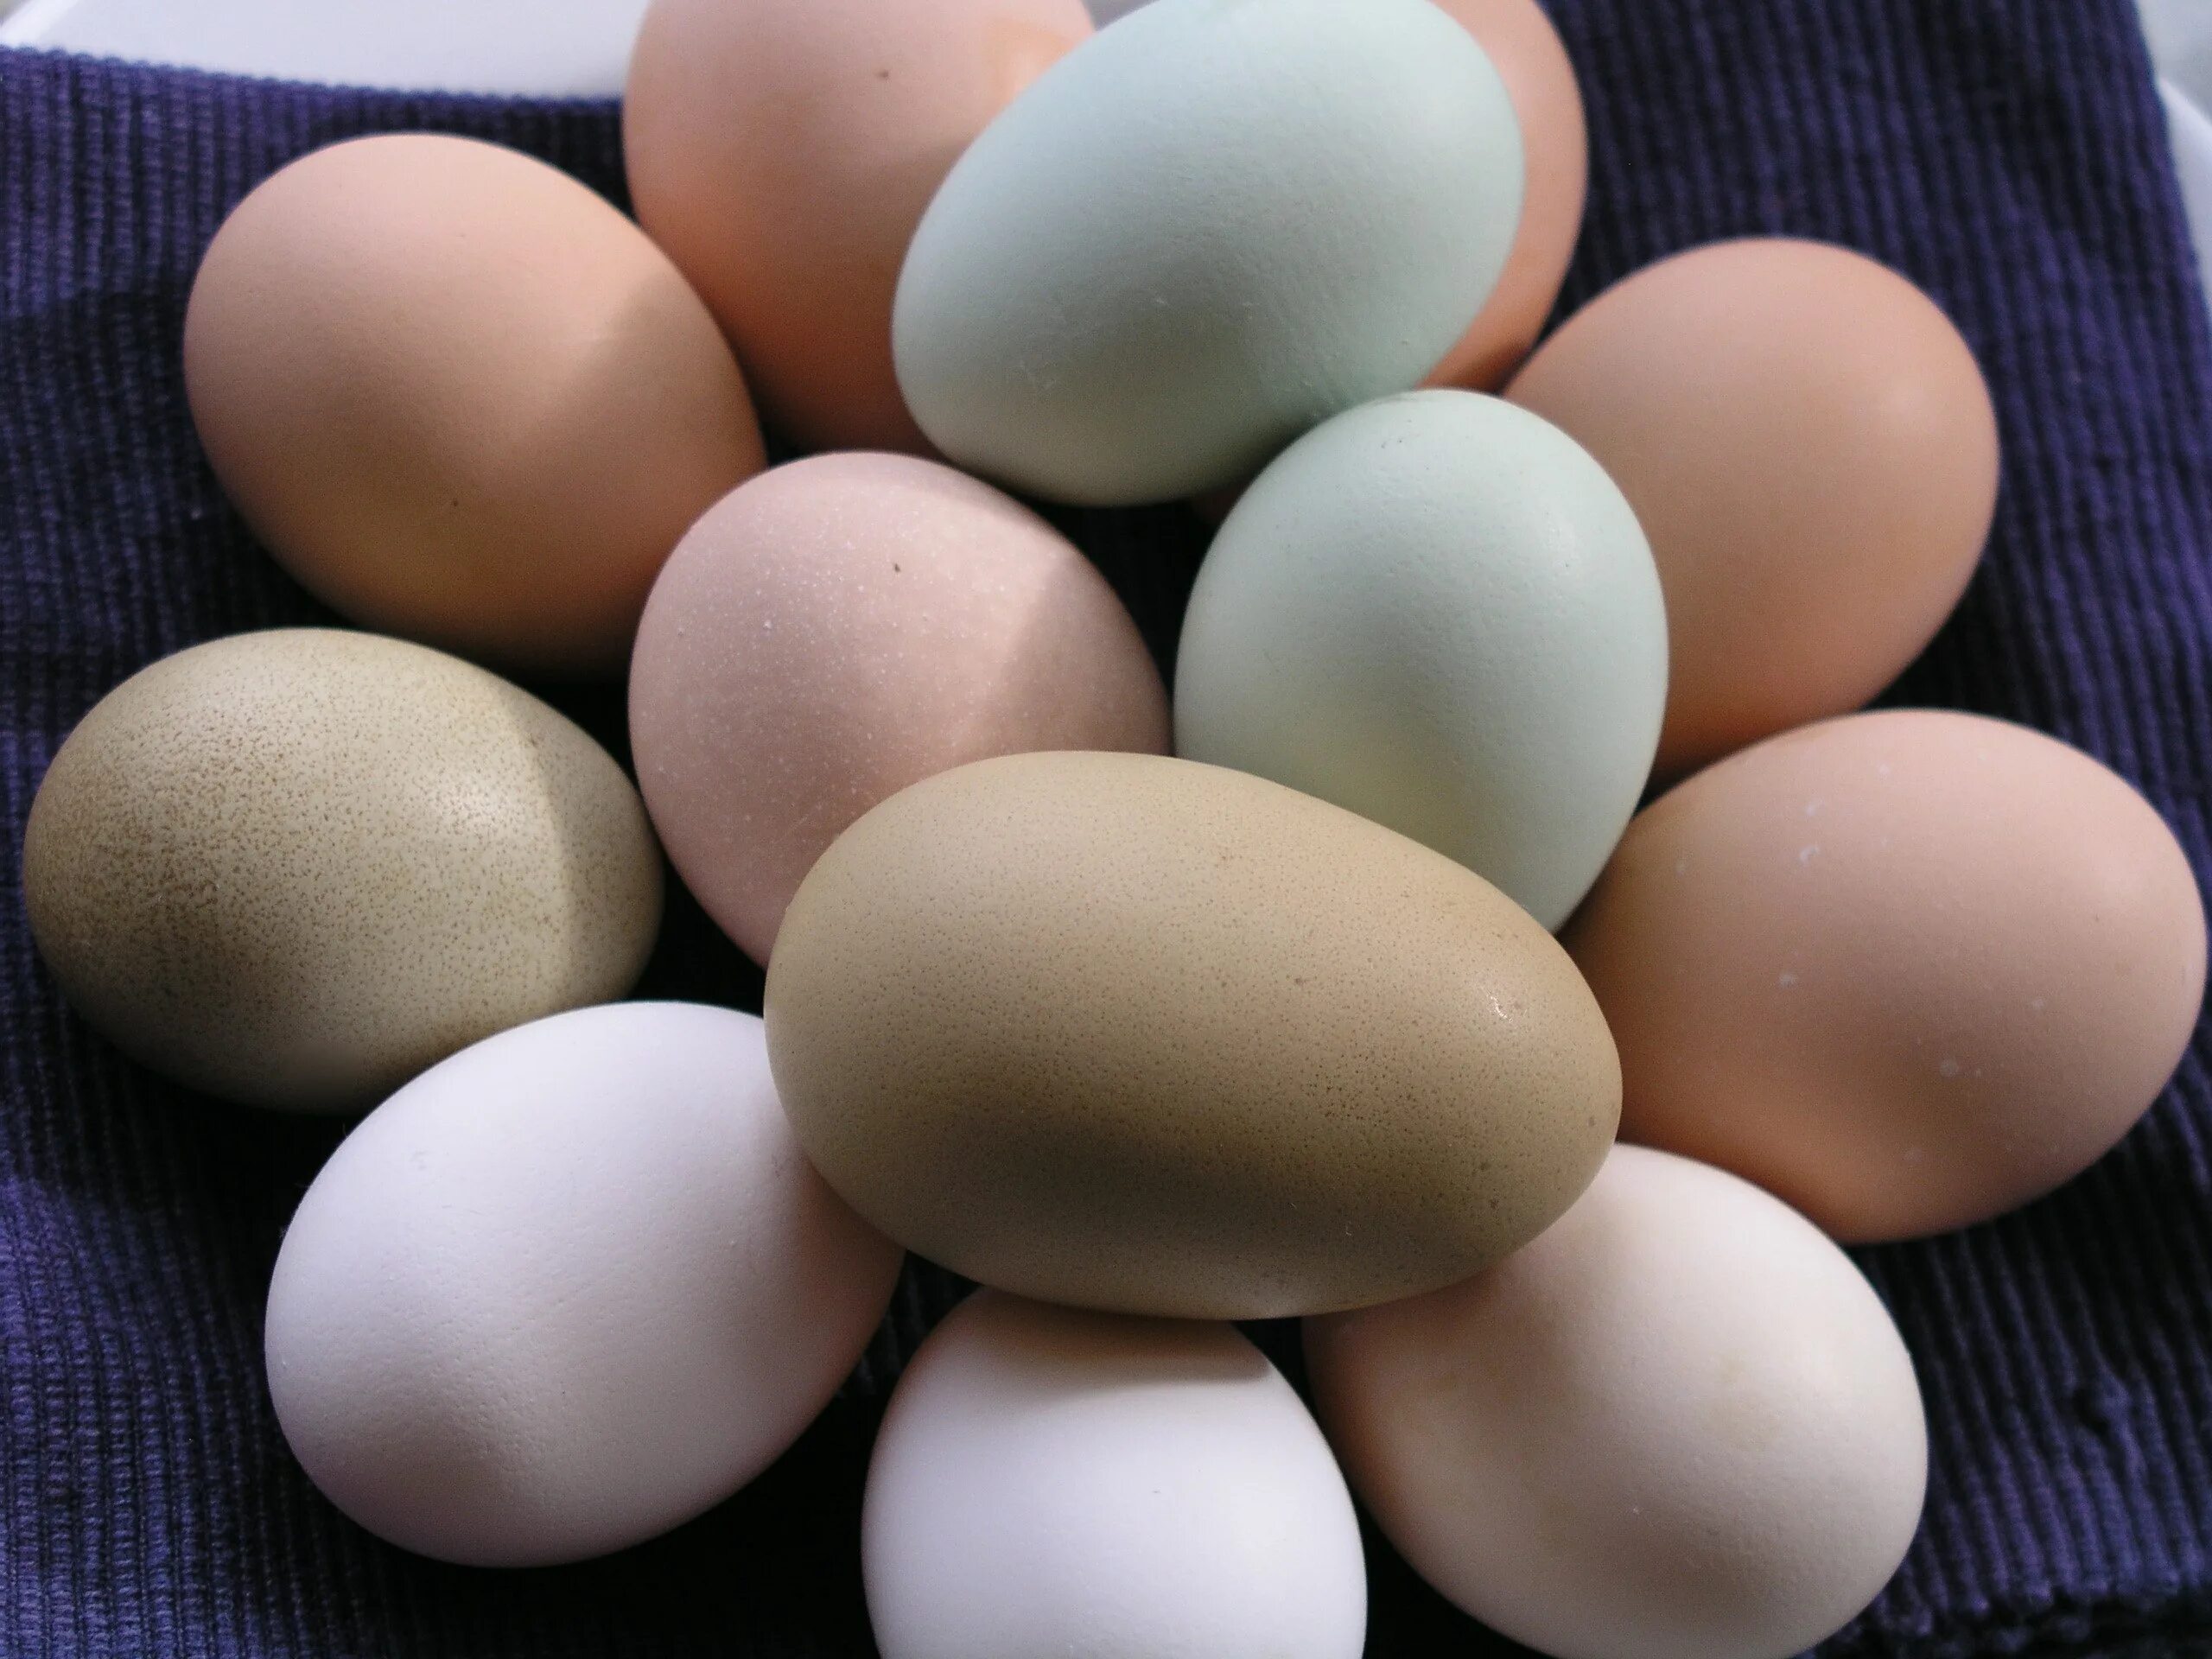 Яйцо Легбар инкубационное. Ухейилюй куры яйца. Льюянг порода кур яйцо. Инкубационное яйцо Ухейилюй. Кремовые яйца